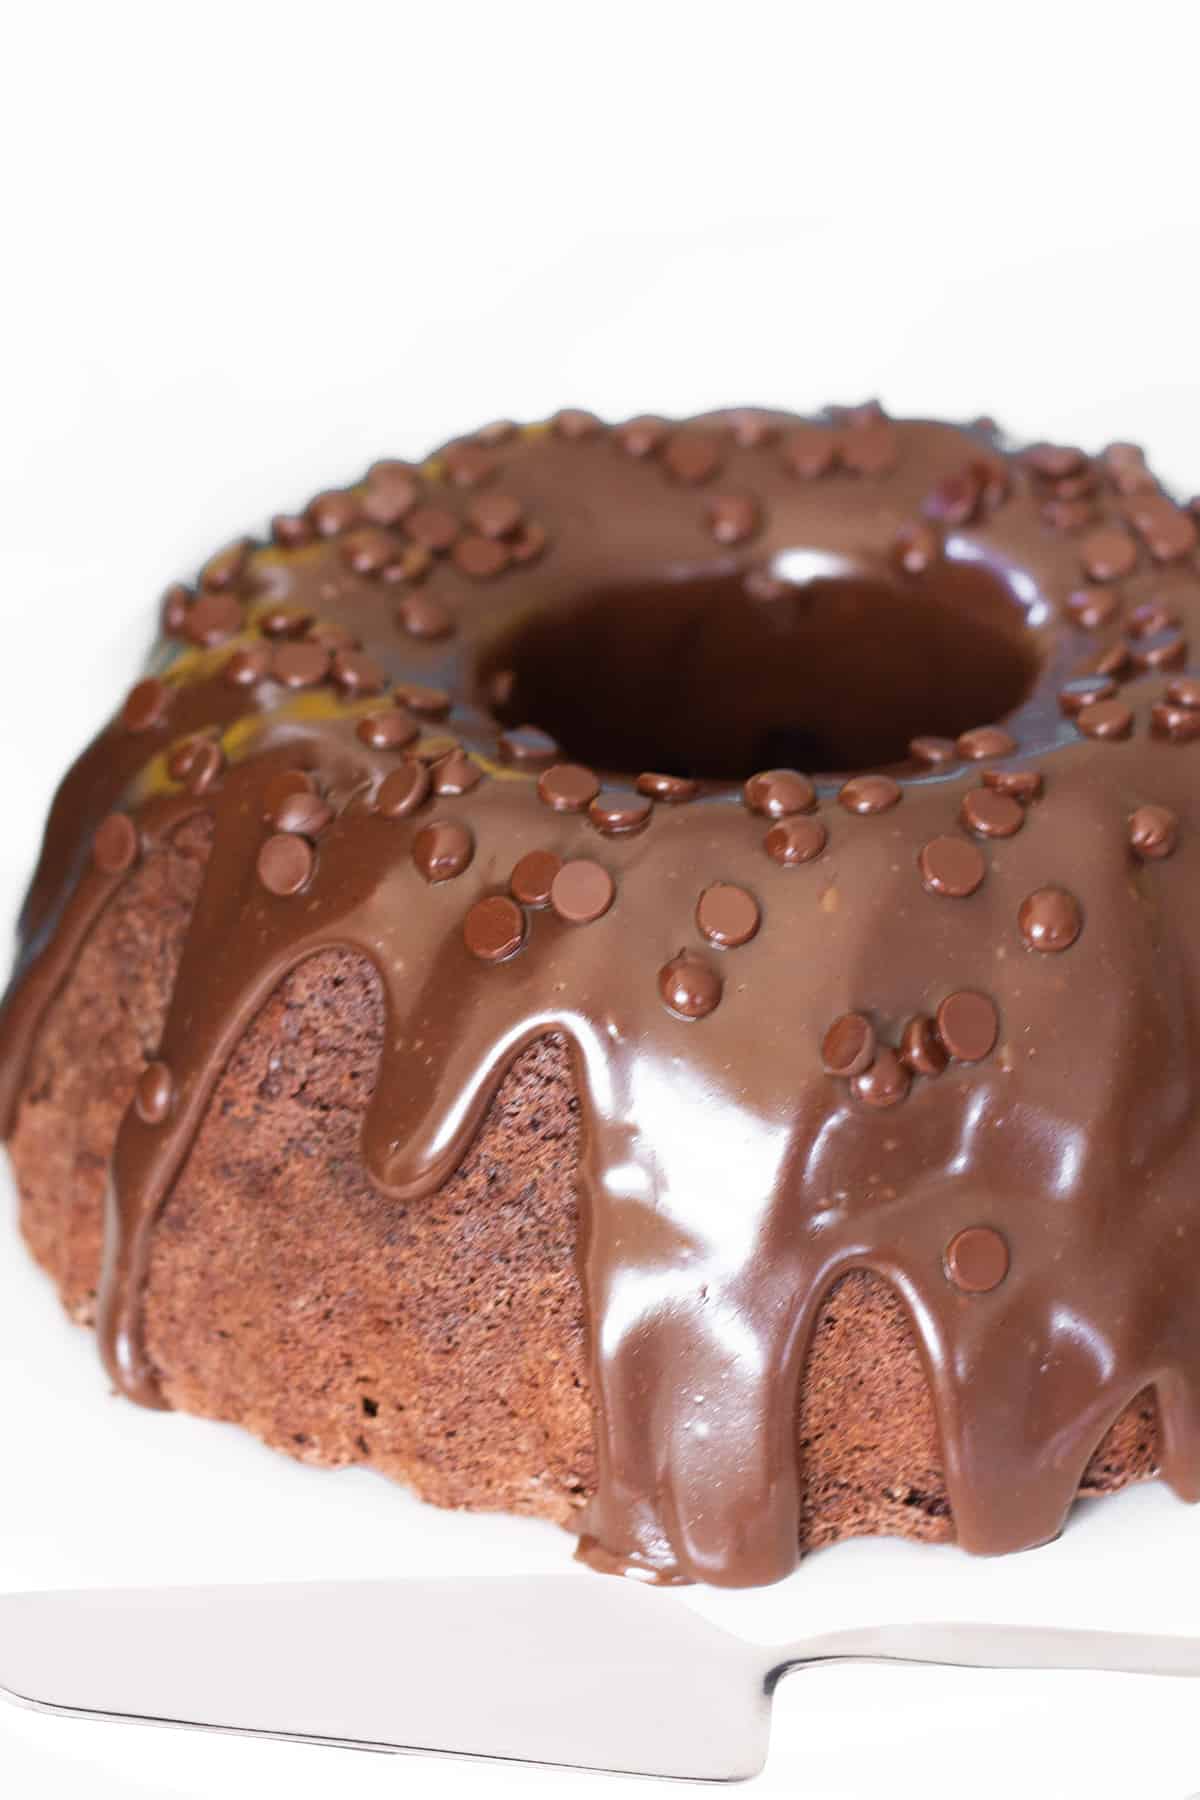 https://www.errenskitchen.com/wp-content/uploads/2015/04/Double-Chocolate-Bundt-Cake-1-6.jpg